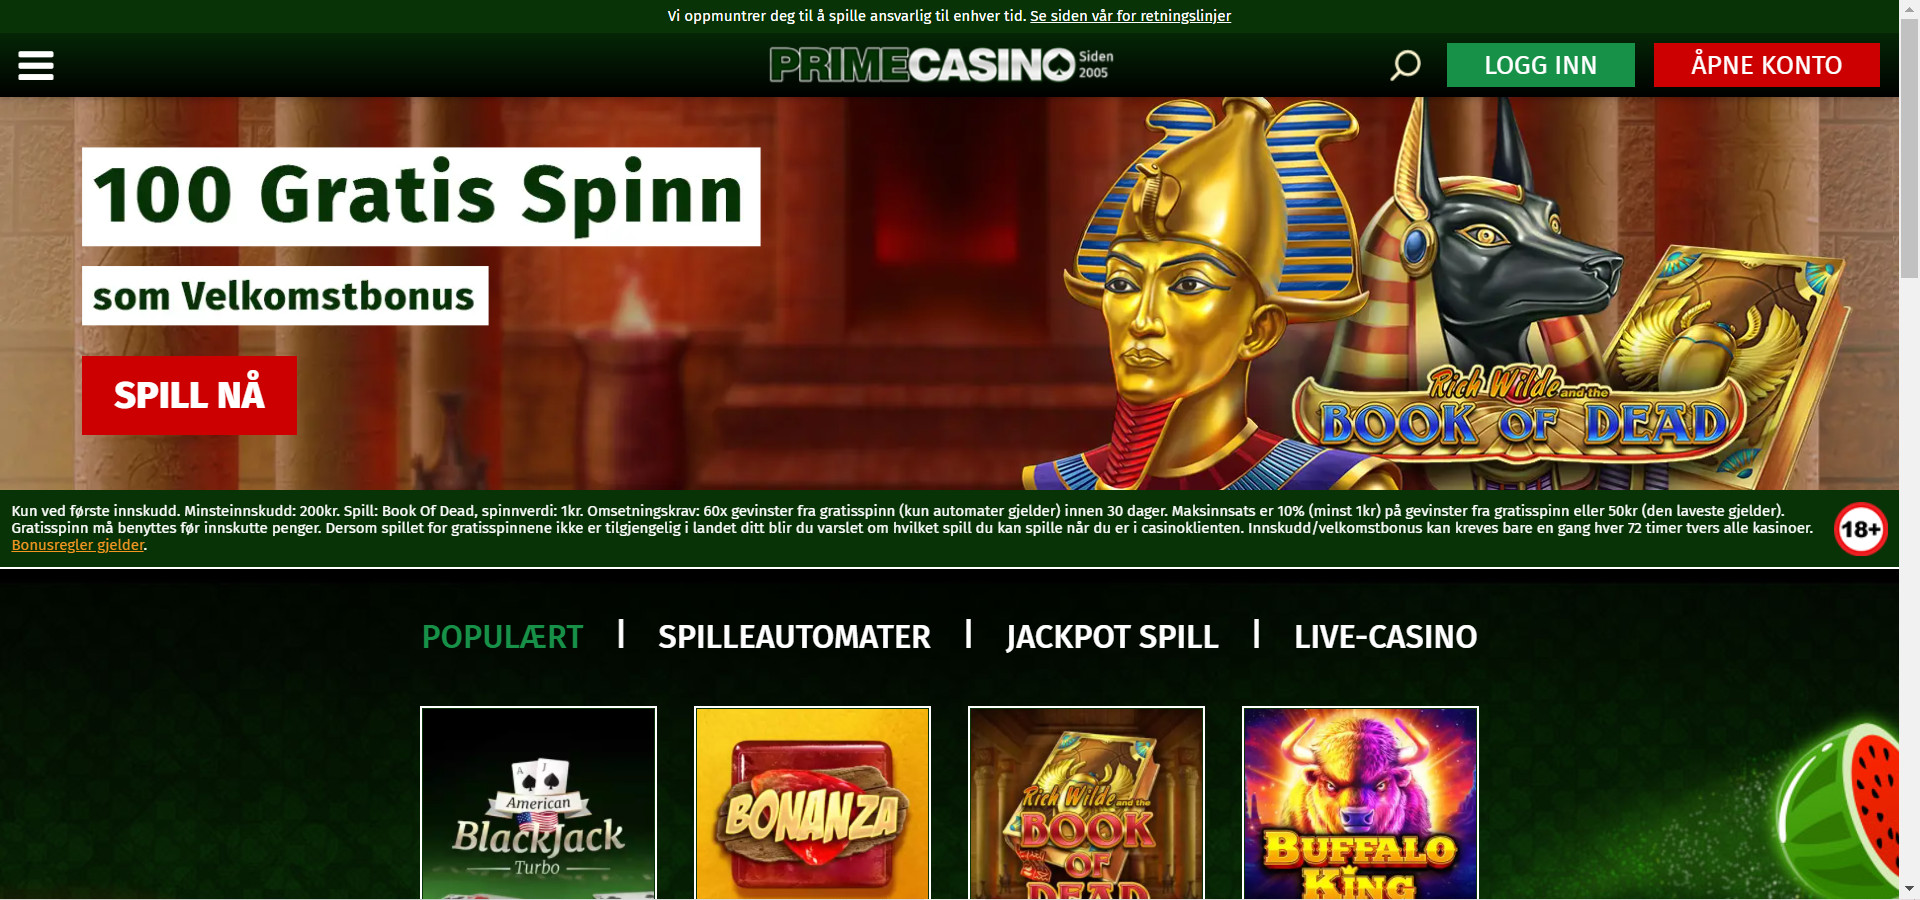 Prime Casino skjermbilde